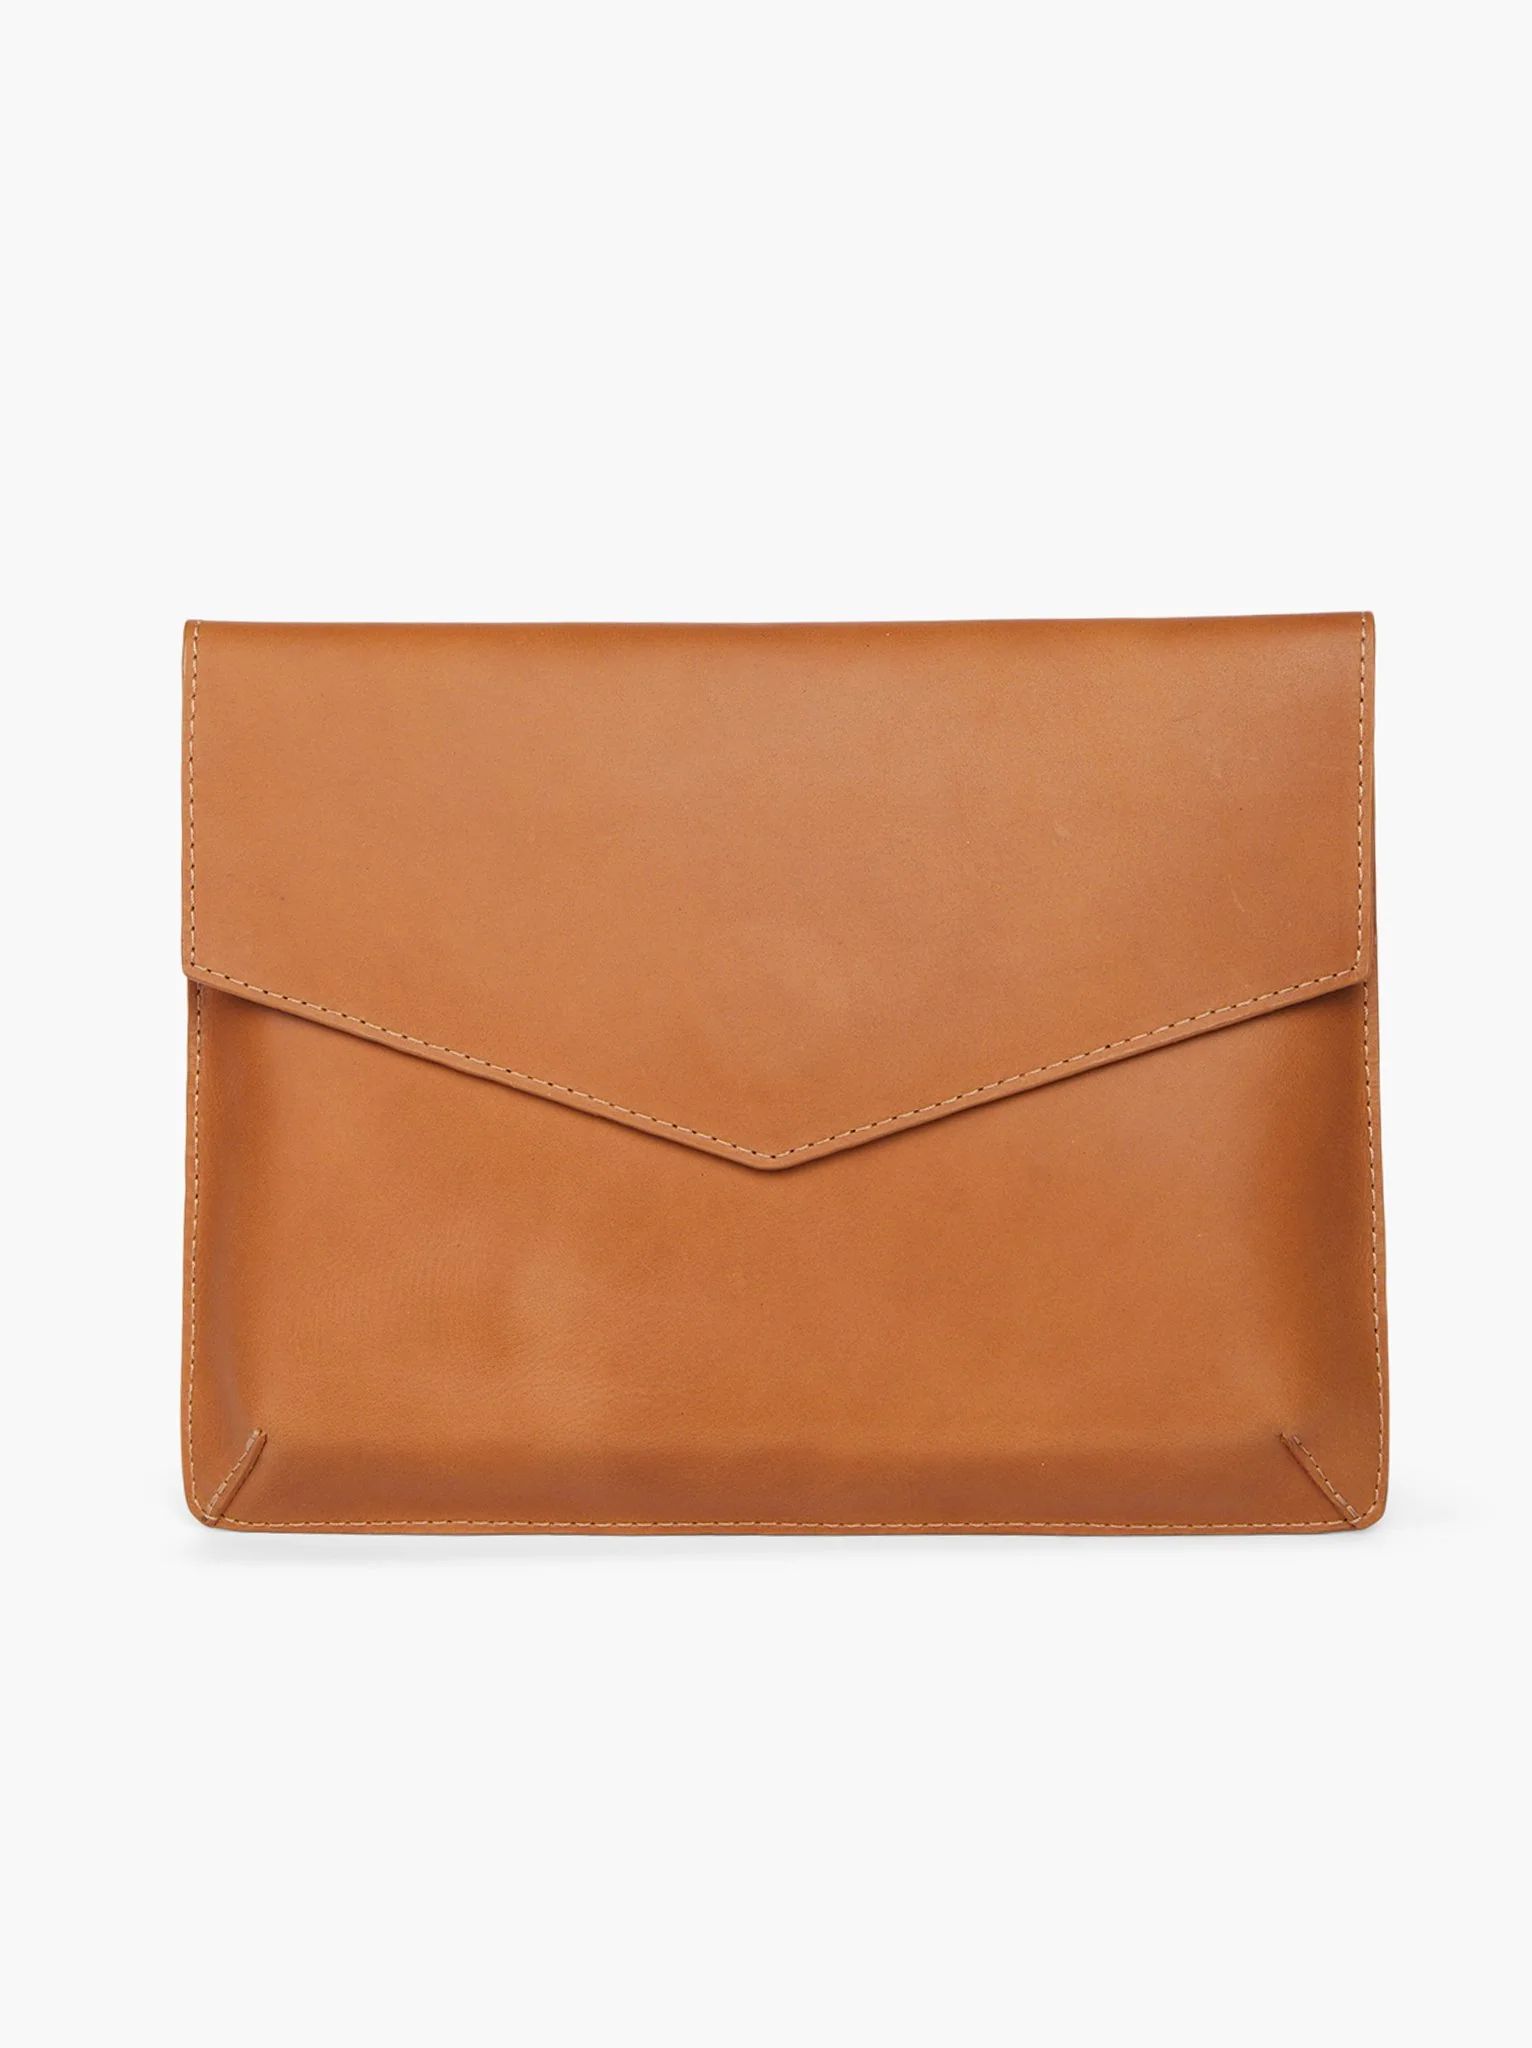 Envelope Clutch | ABLE